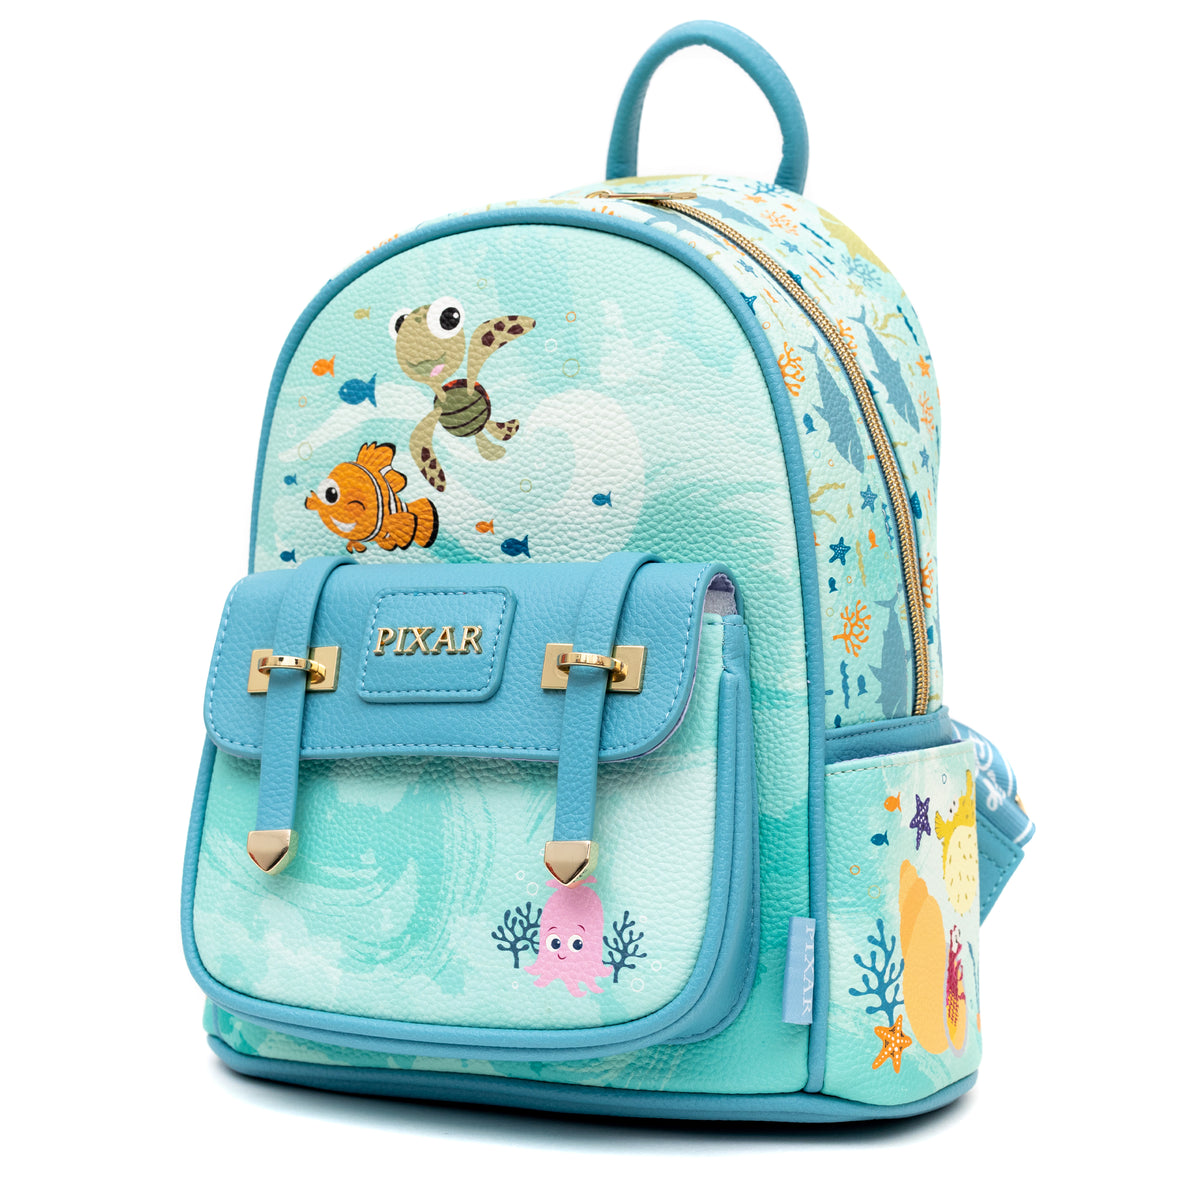 Disney Pixar Finding Nemo Mini Backpack